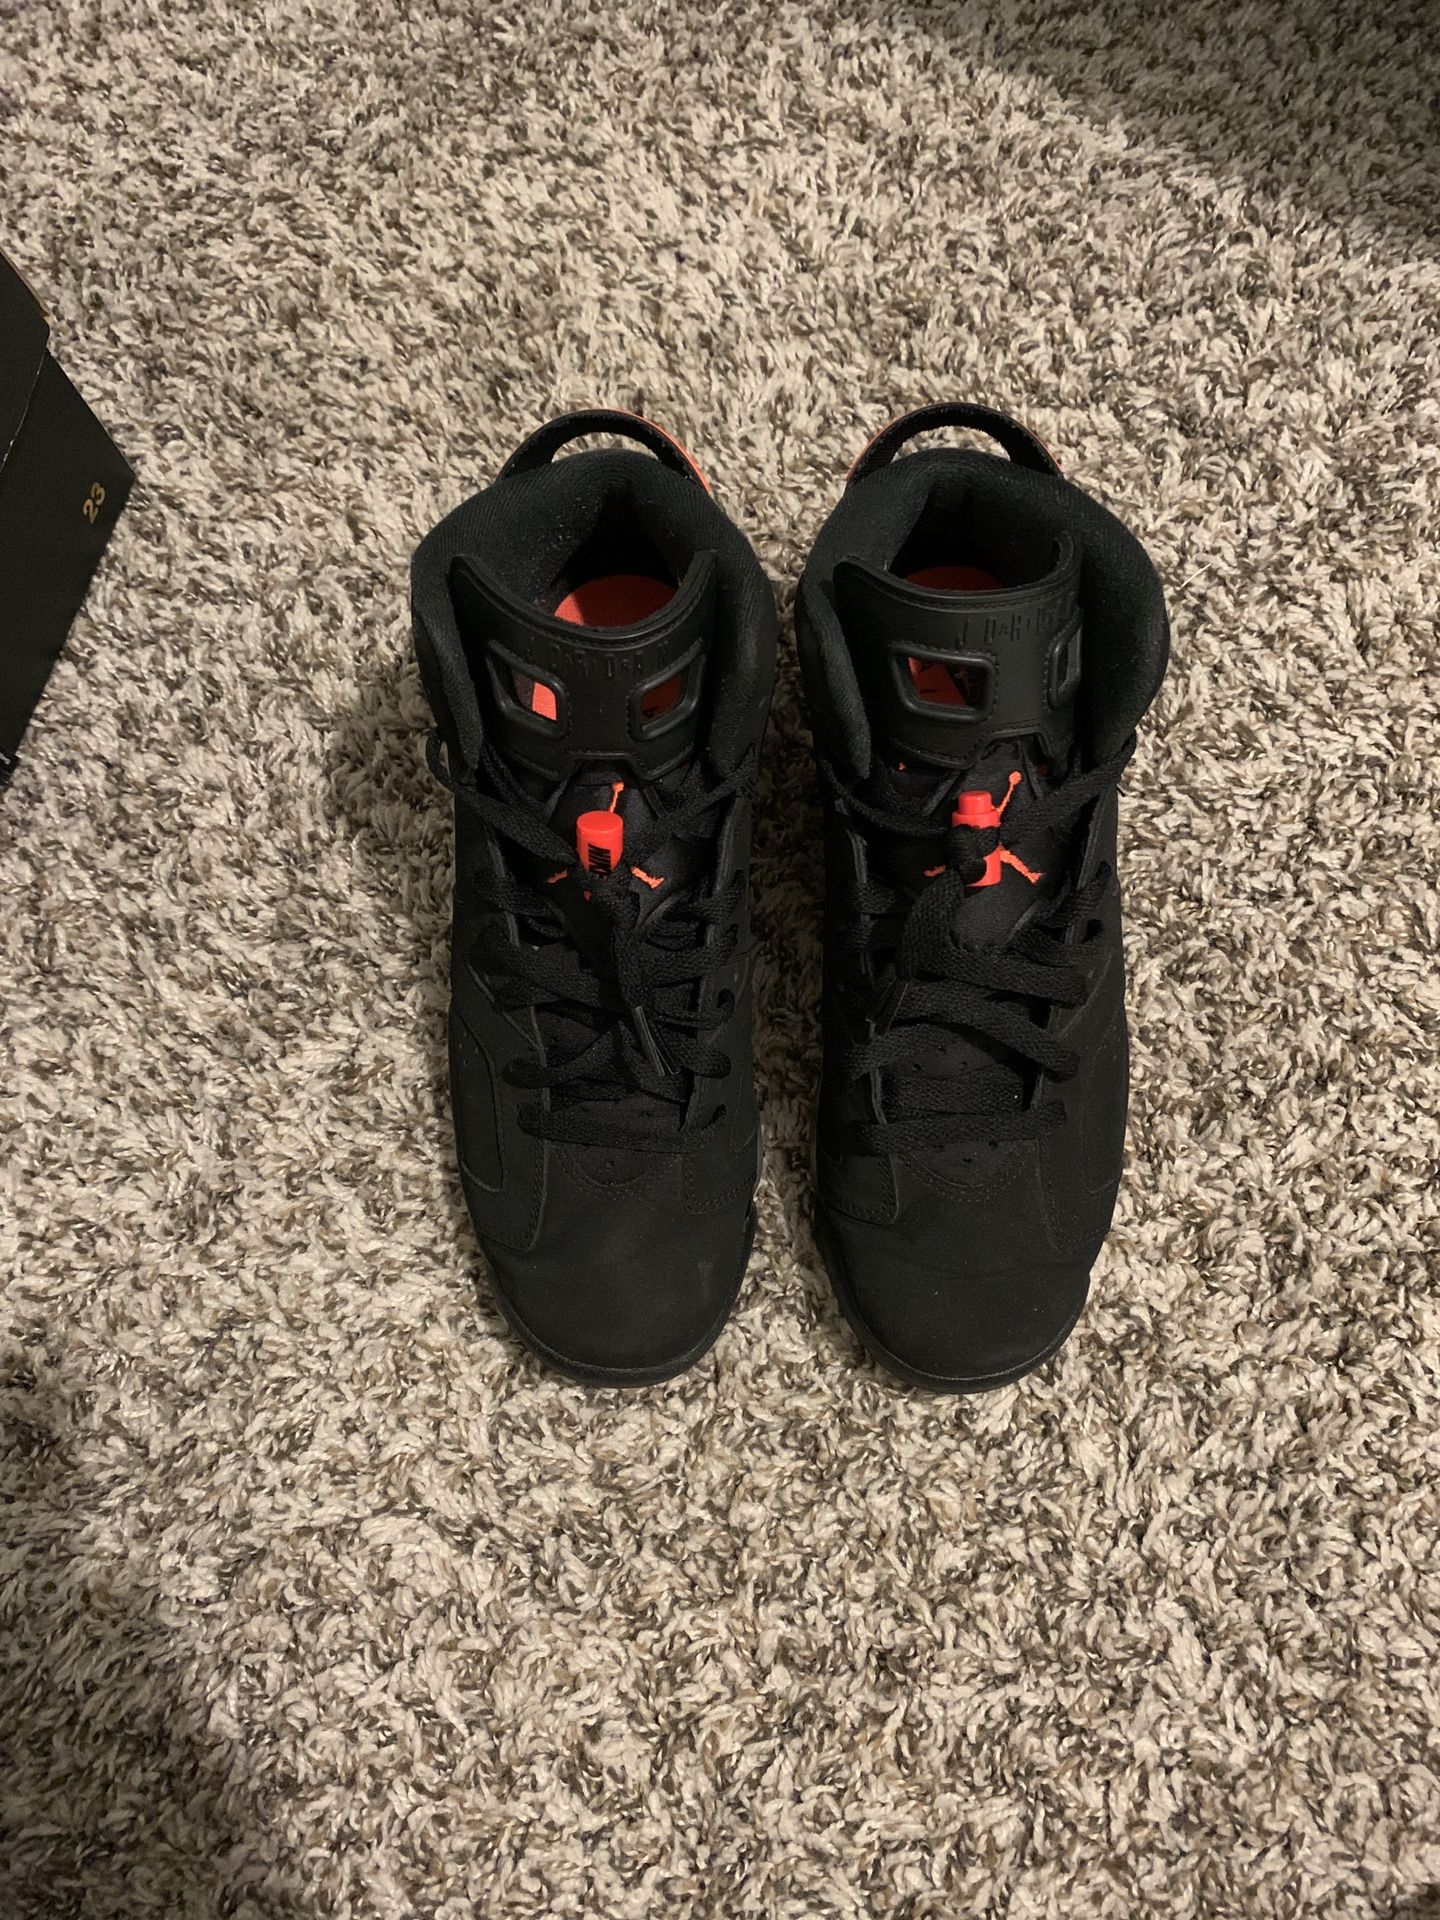 Nike Air Jordan 6 Retro Basketball Shoes - Black Infrared Size 7